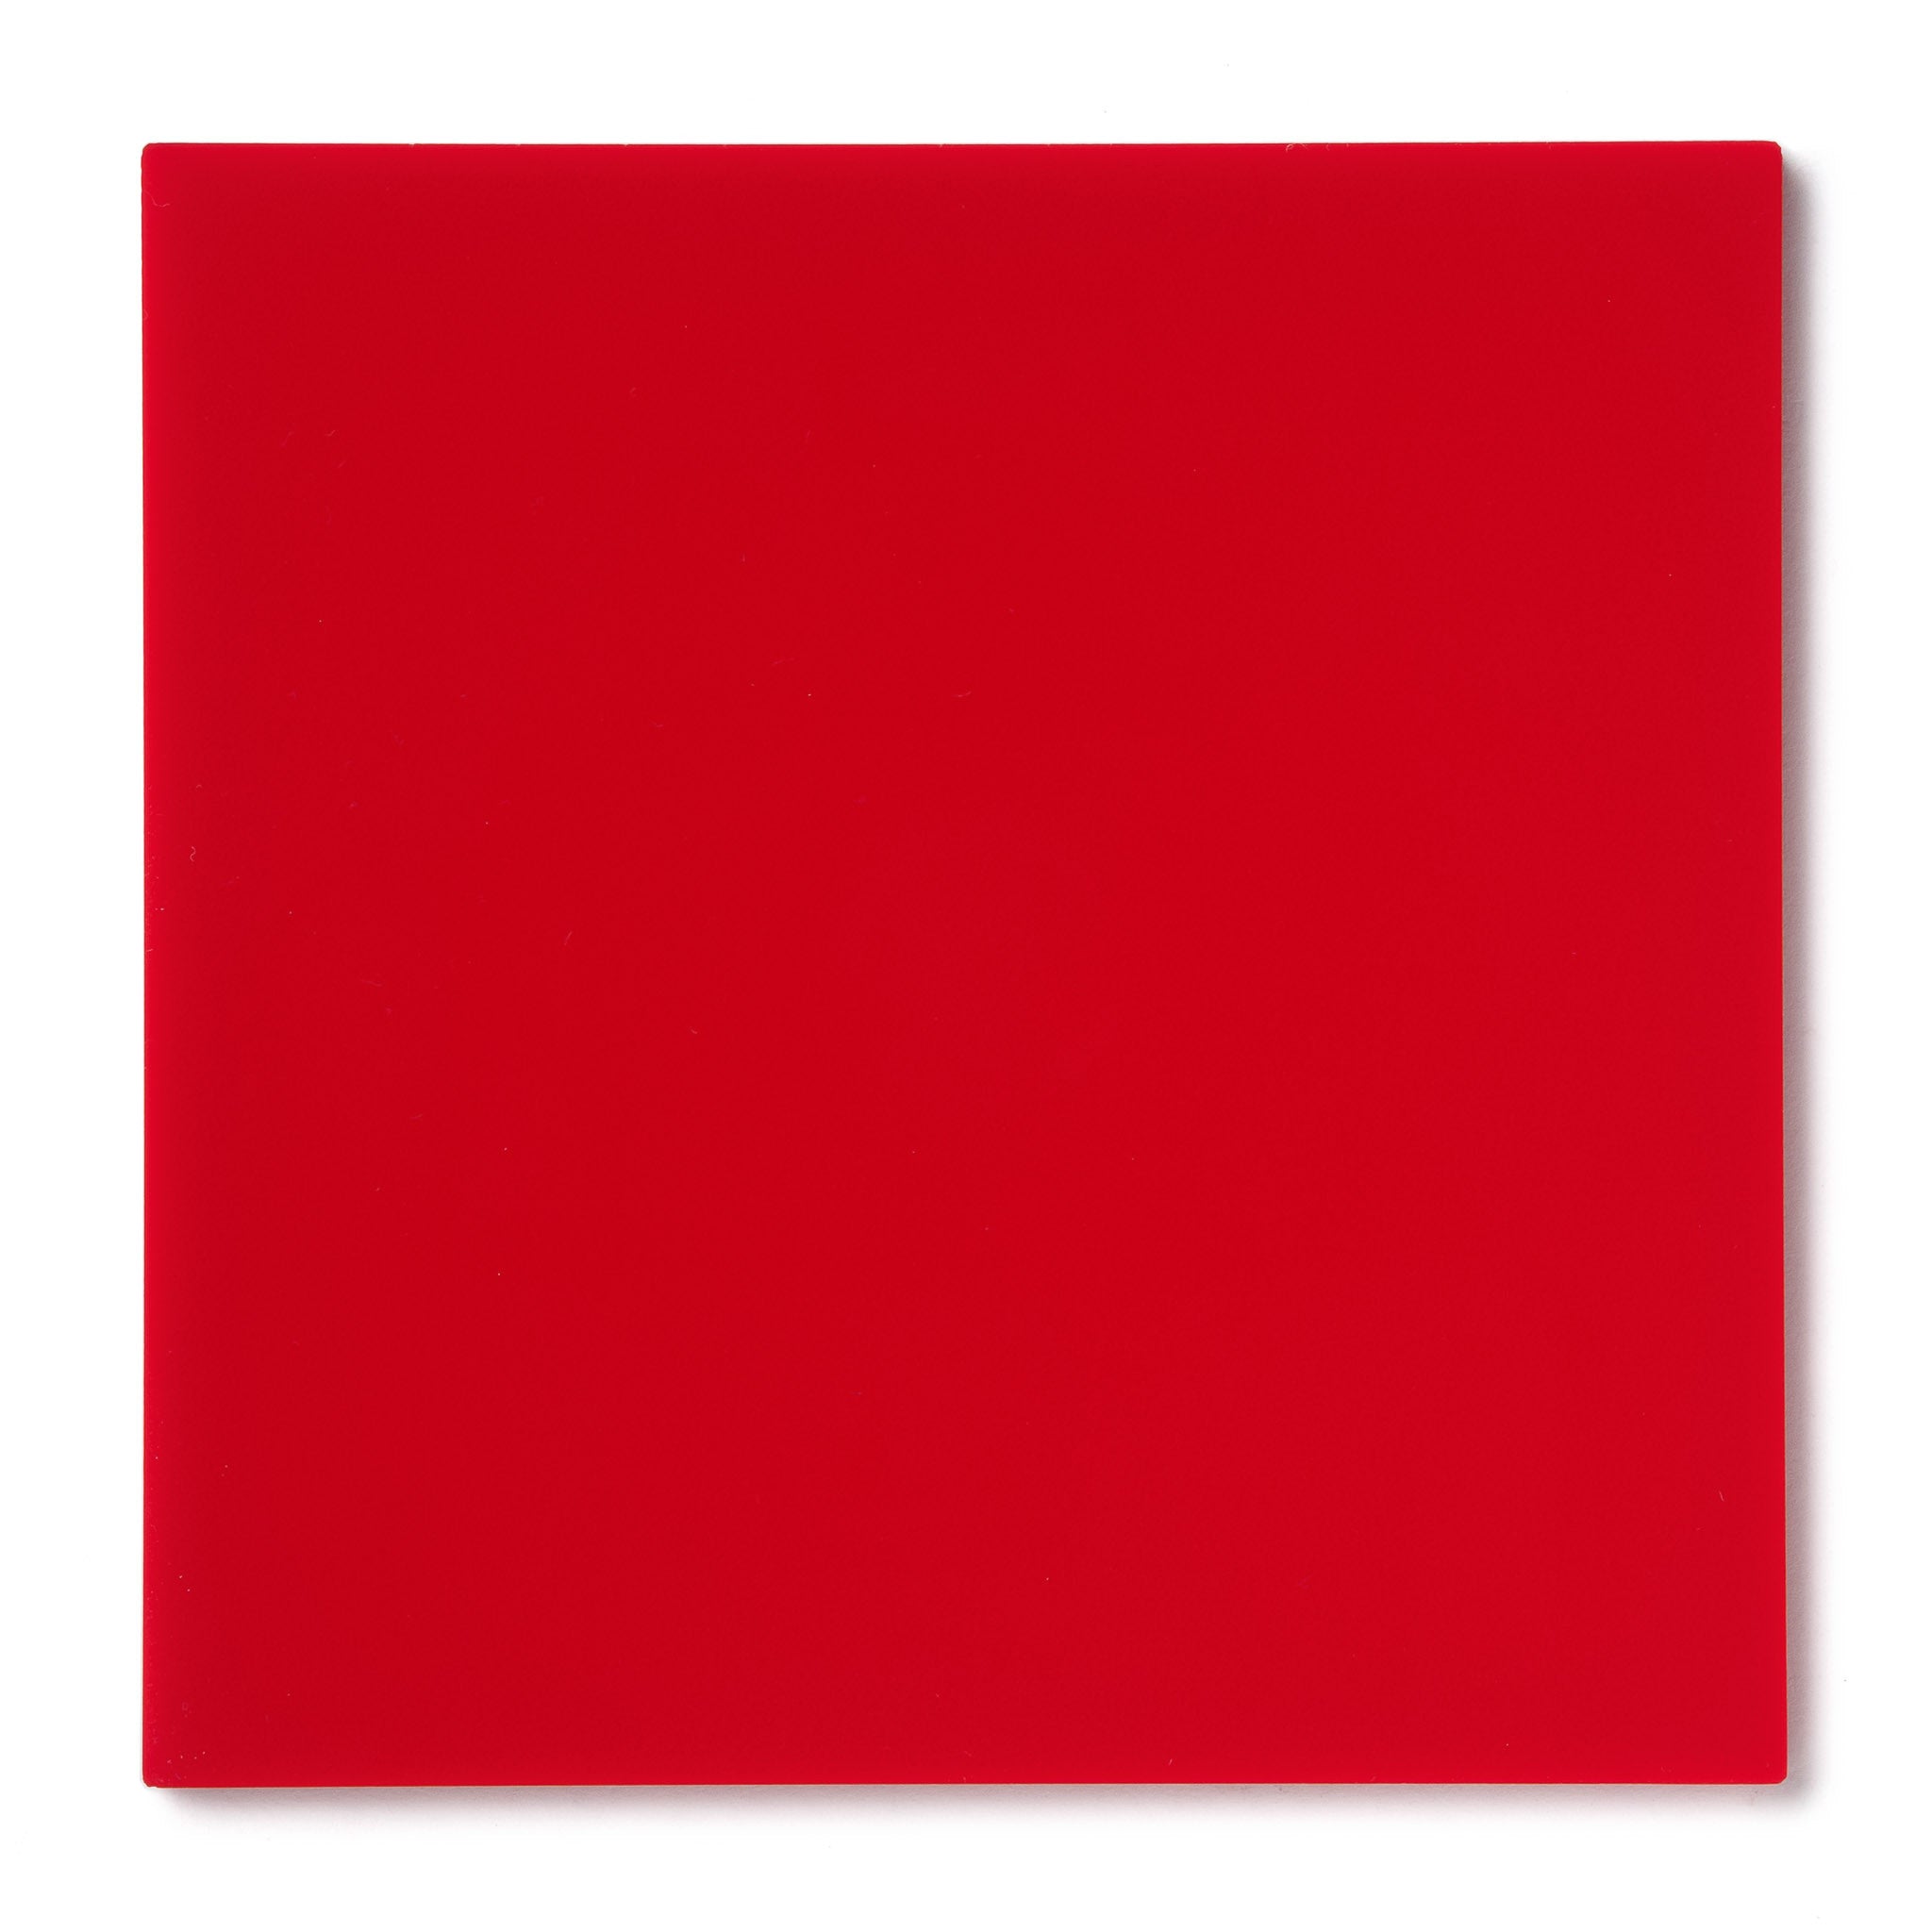 Red Opaque Acrylic Plexiglass Sheet, color 2157